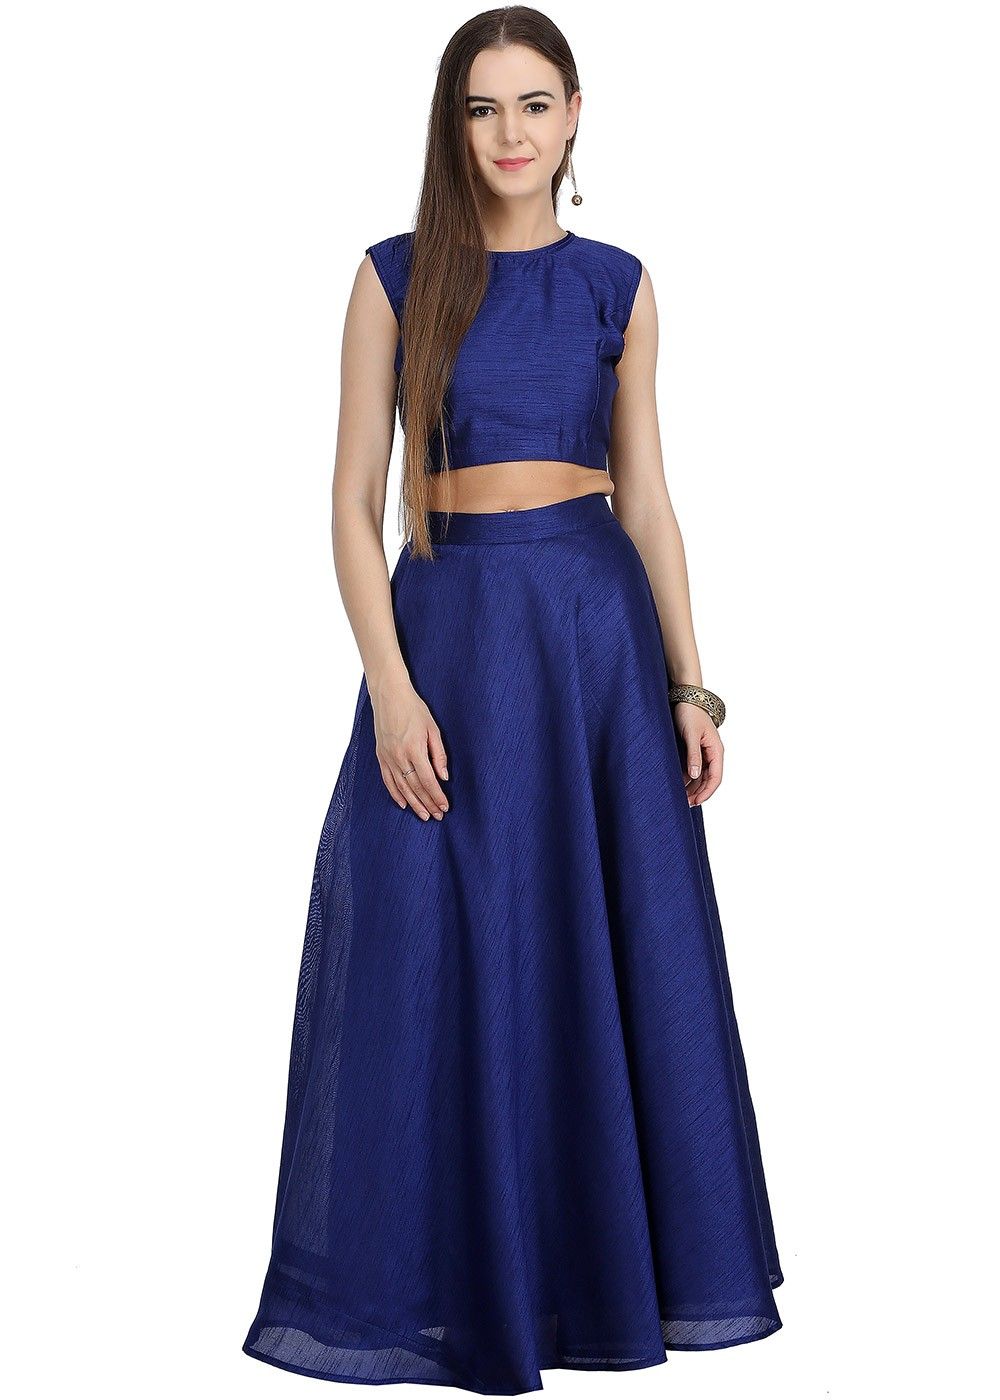 Discover 80+ blue colour long skirt best